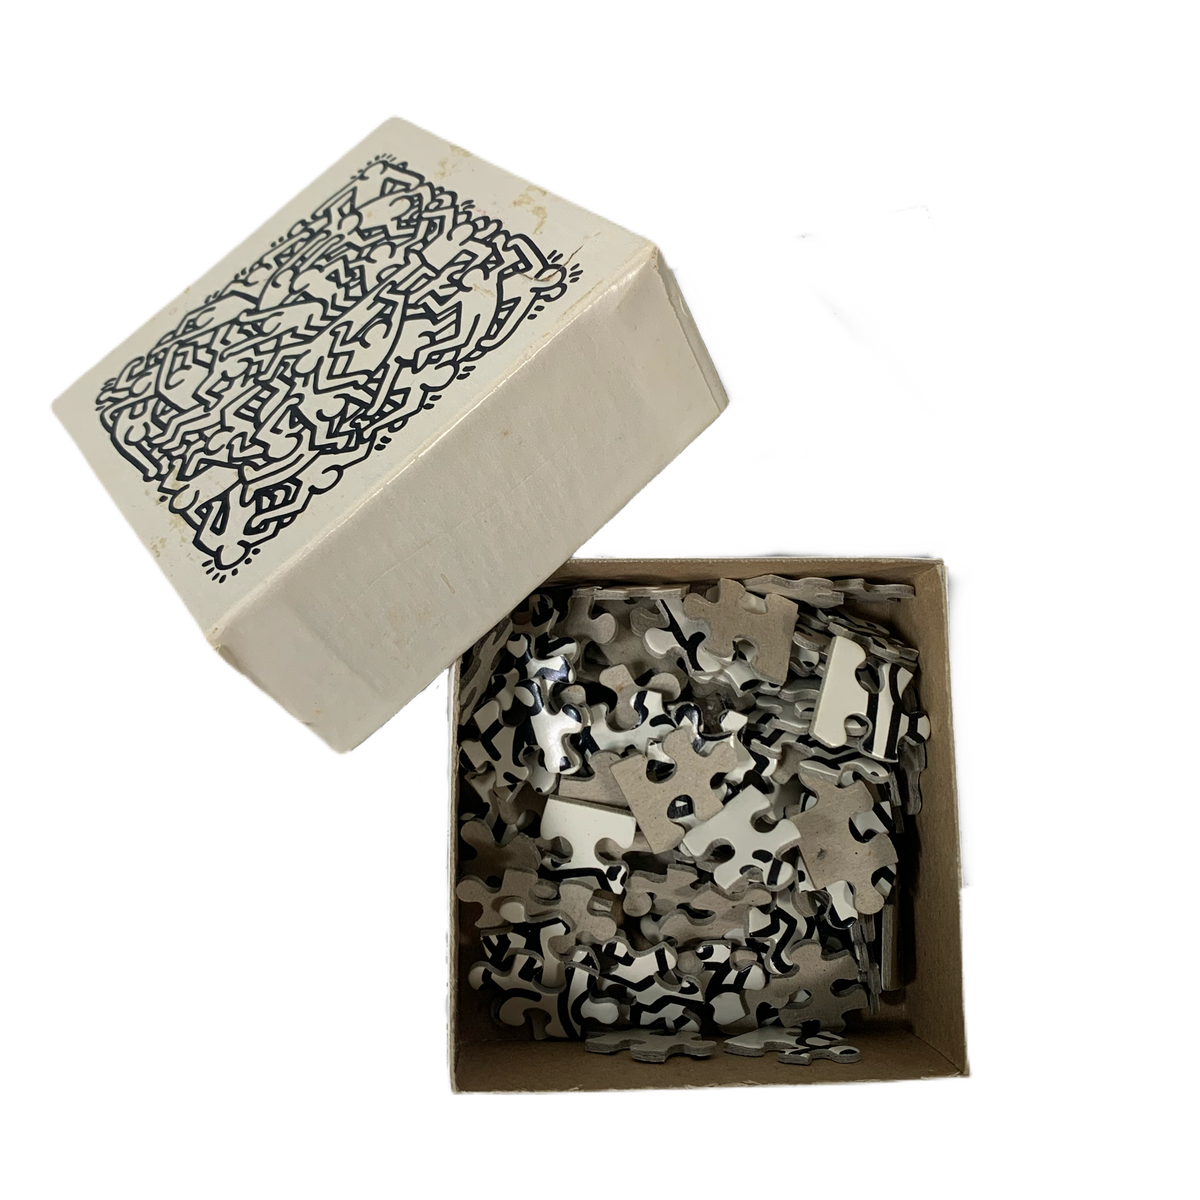 Vintage Keith Haring Pop Shop “Untitled” Puzzle